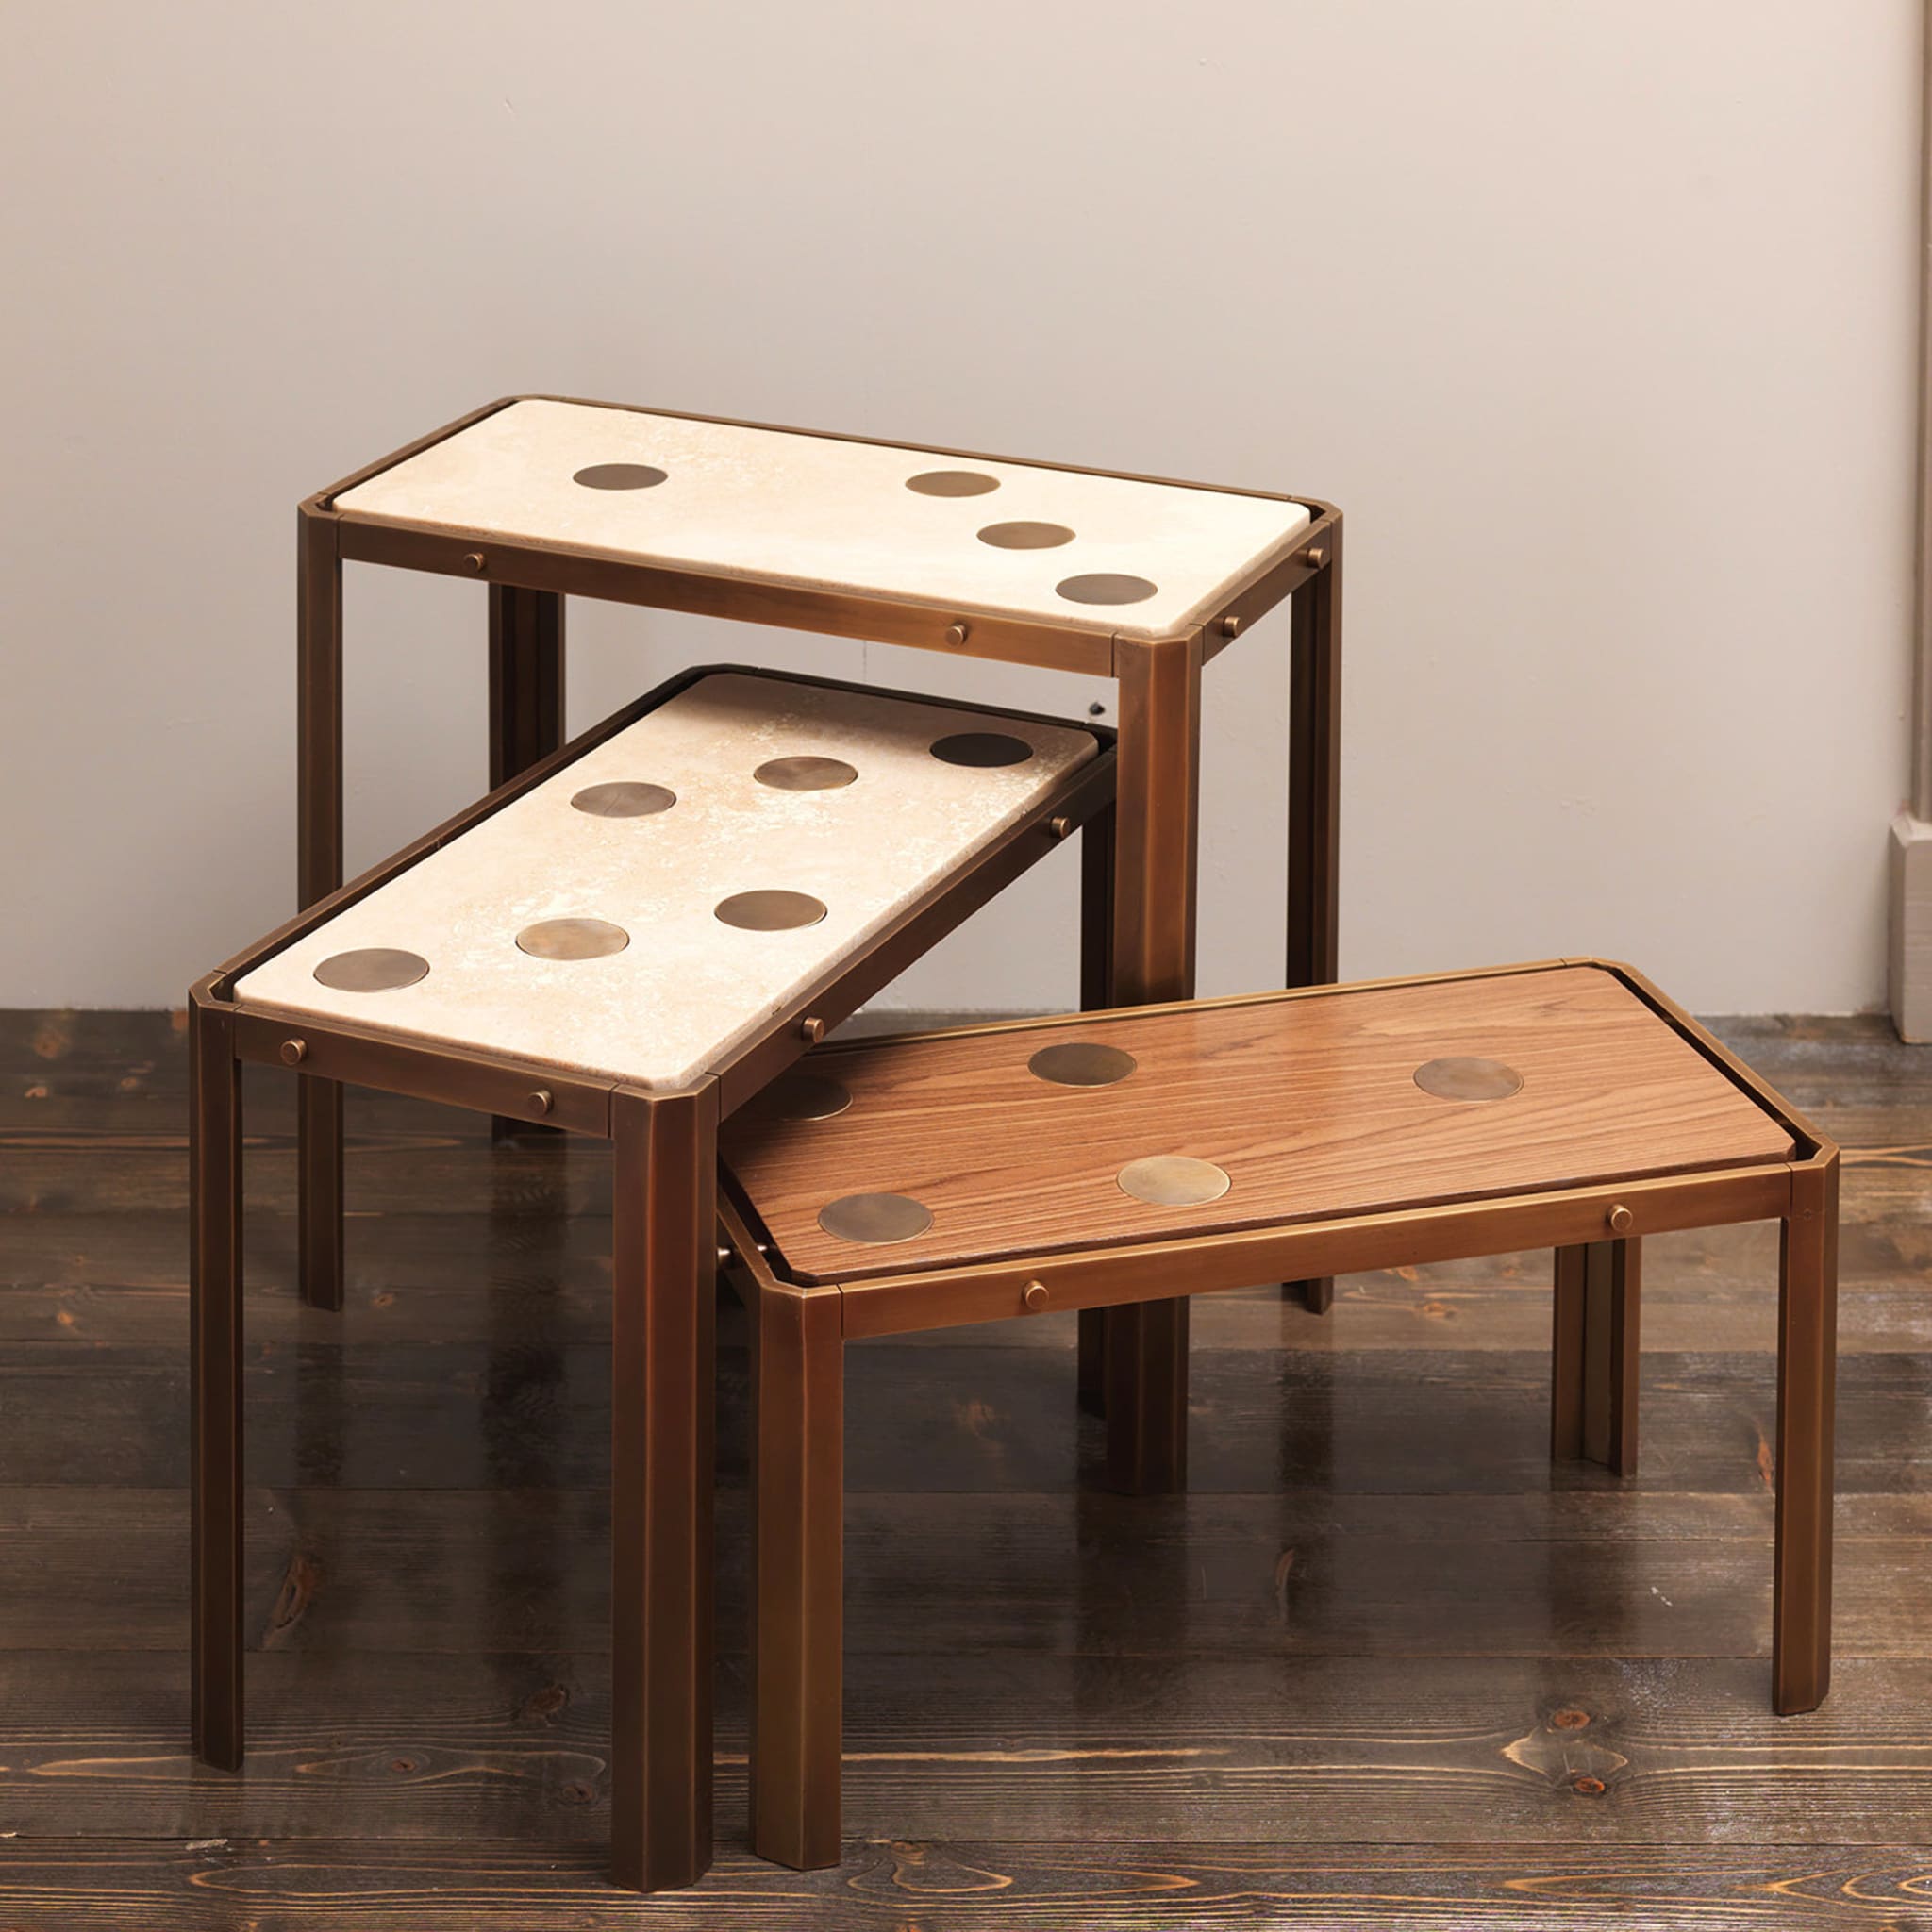 Domino Set of 3 Nesting Tables by Ciarmoli Queda Studio - Alternative view 1